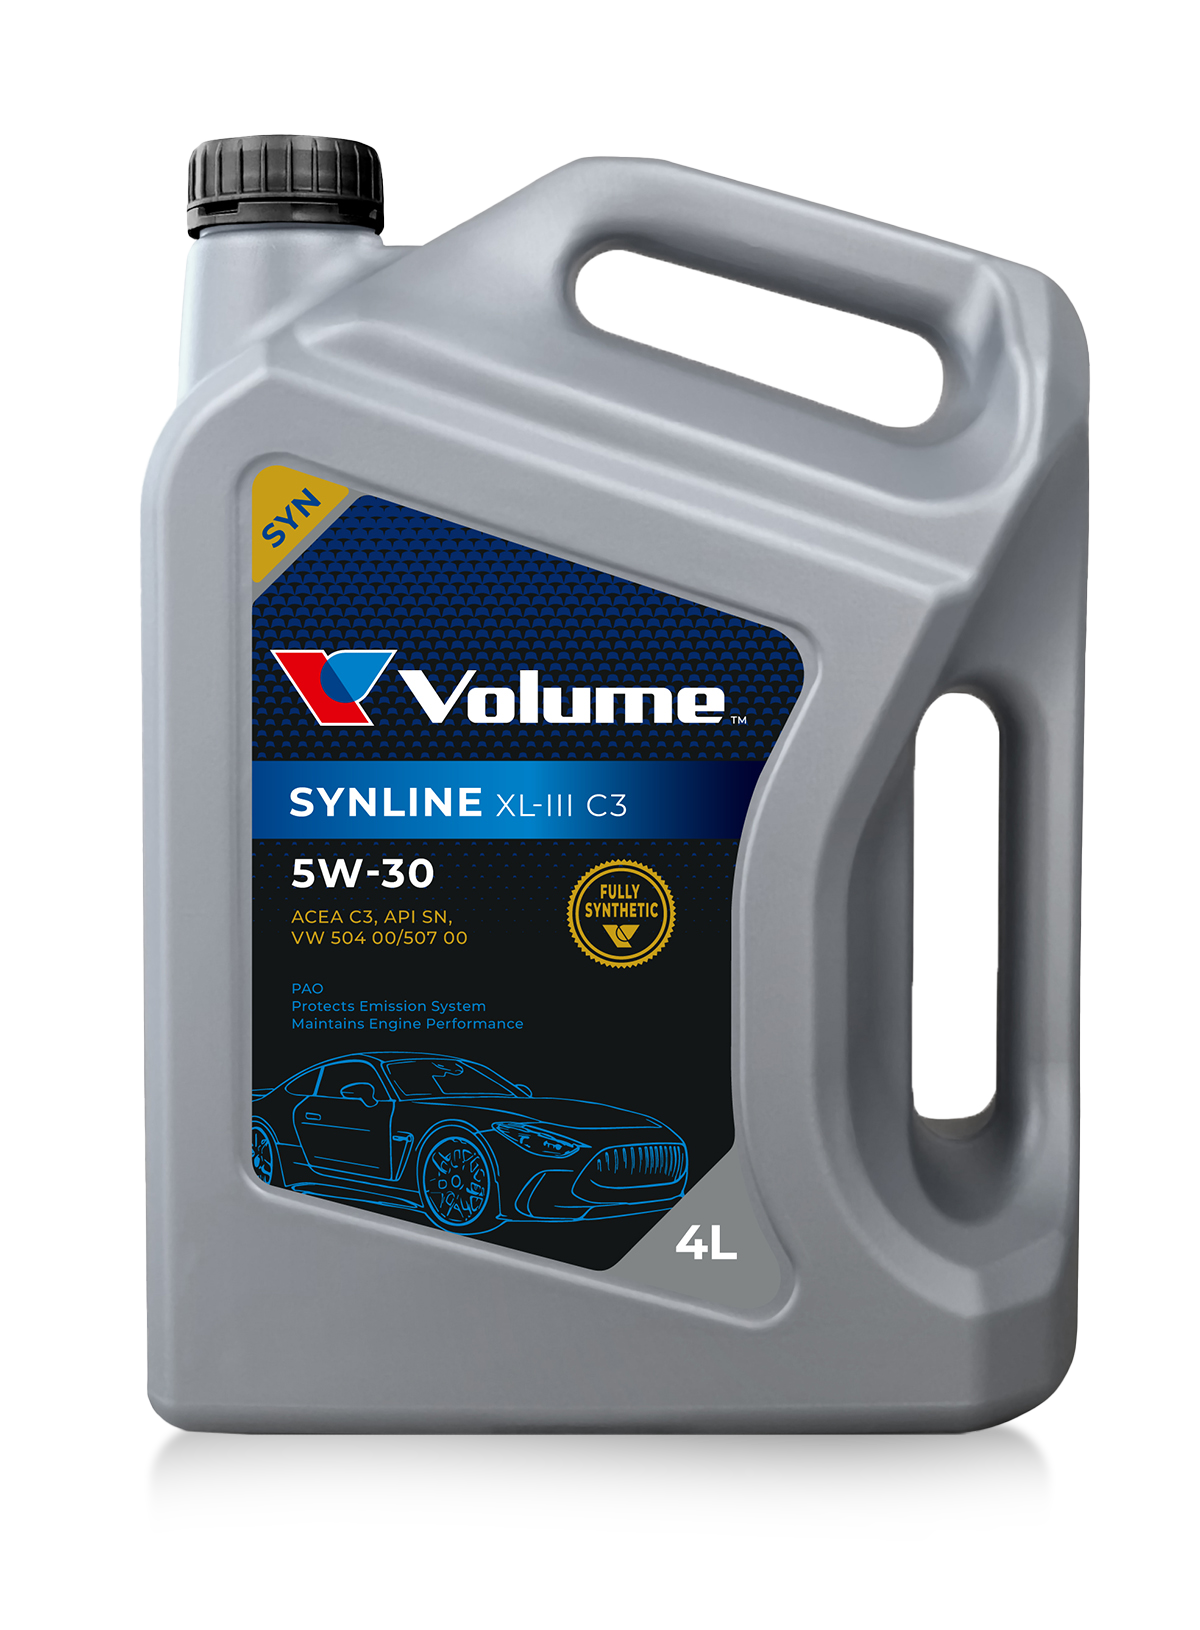 VOLUME SYNLINE Xl-III C3 5W-30